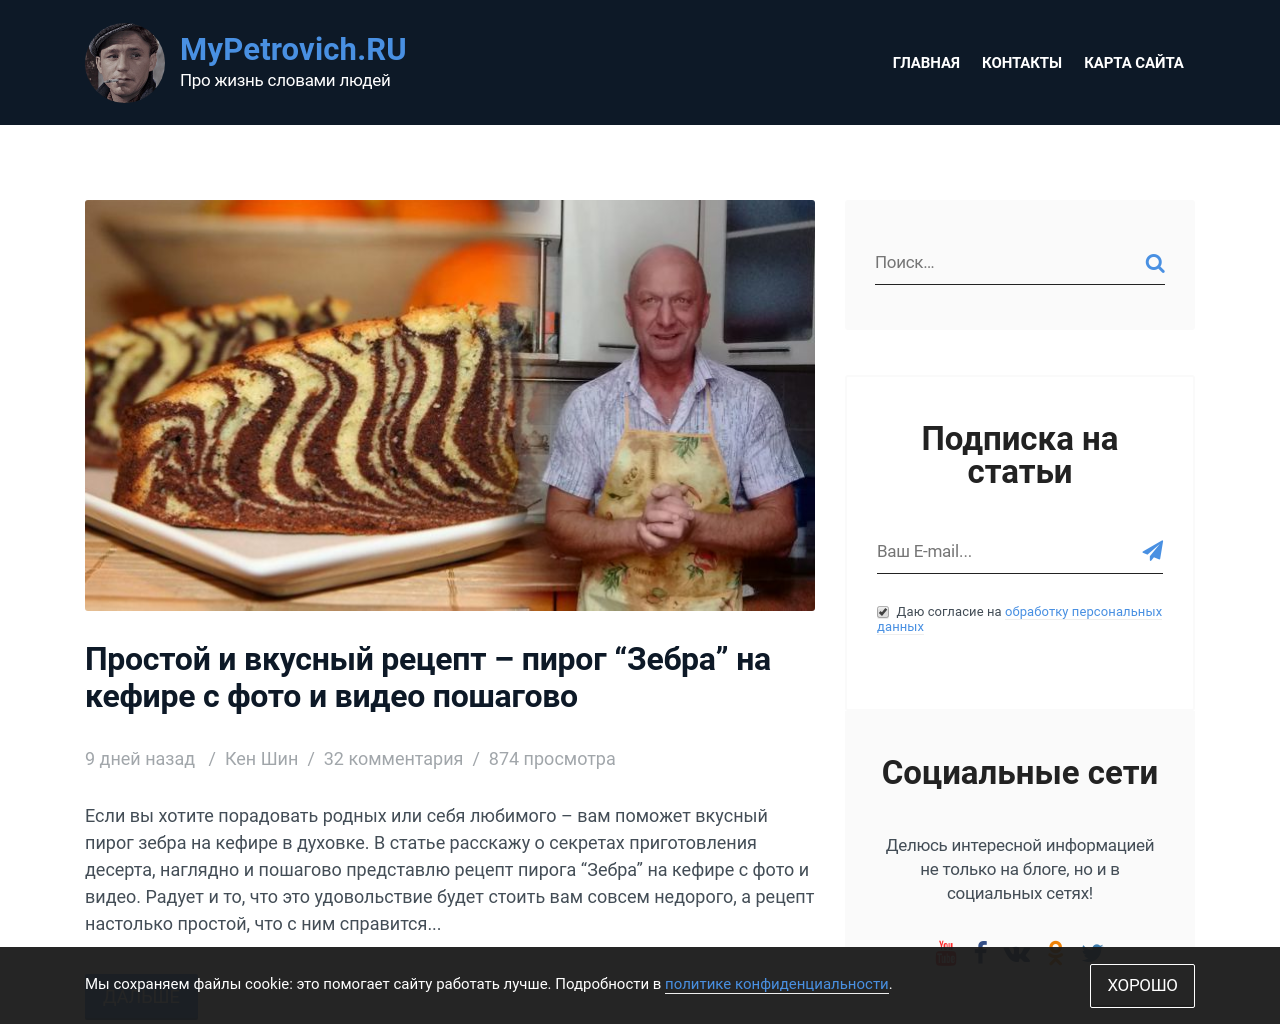 Изображение сайта mypetrovich.ru в разрешении 1280x1024